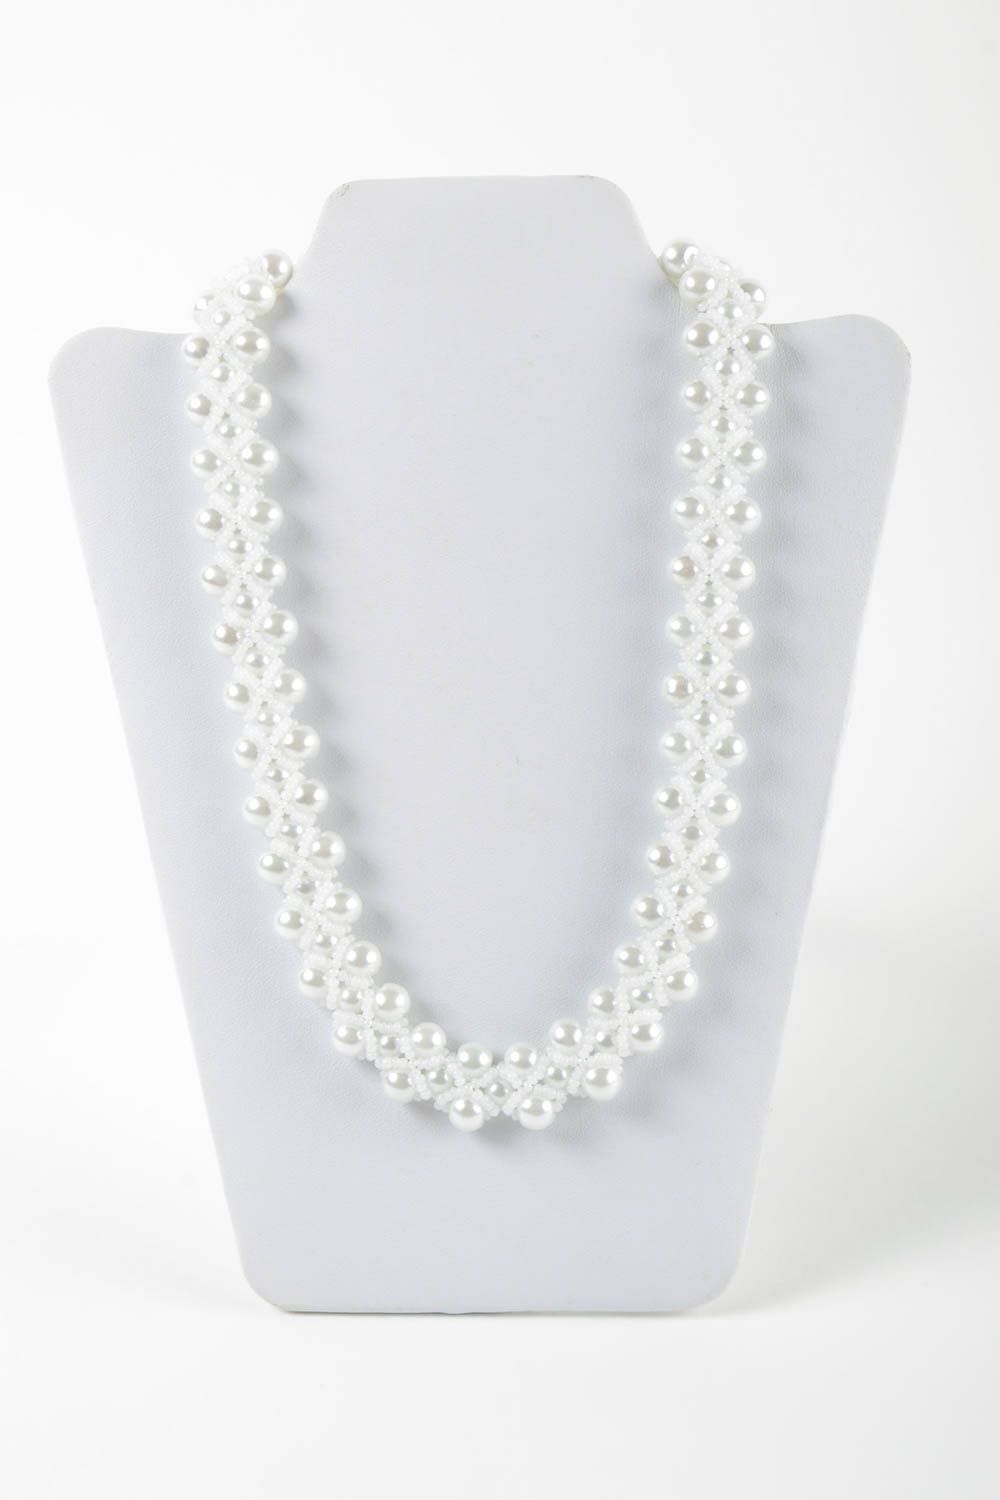 Stylish handmade beaded necklace womens jewelry designs beadwork ideas photo 2